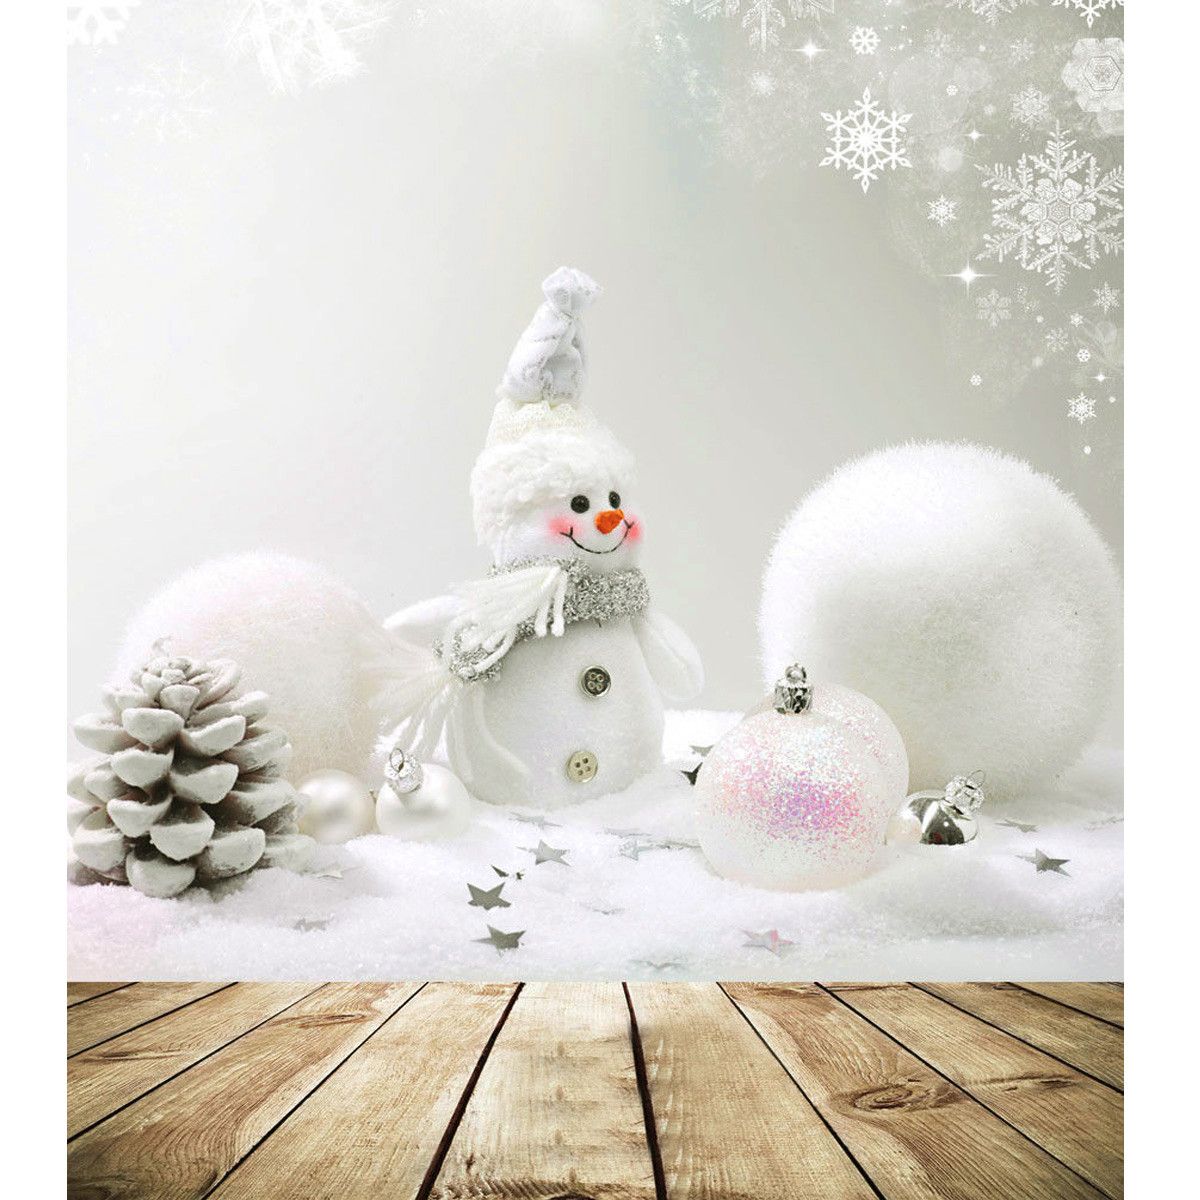 5x7ft-Christmas-Snowman-Wall-Board-Studio-Photo-Photography-Background-Backdrop-1092115